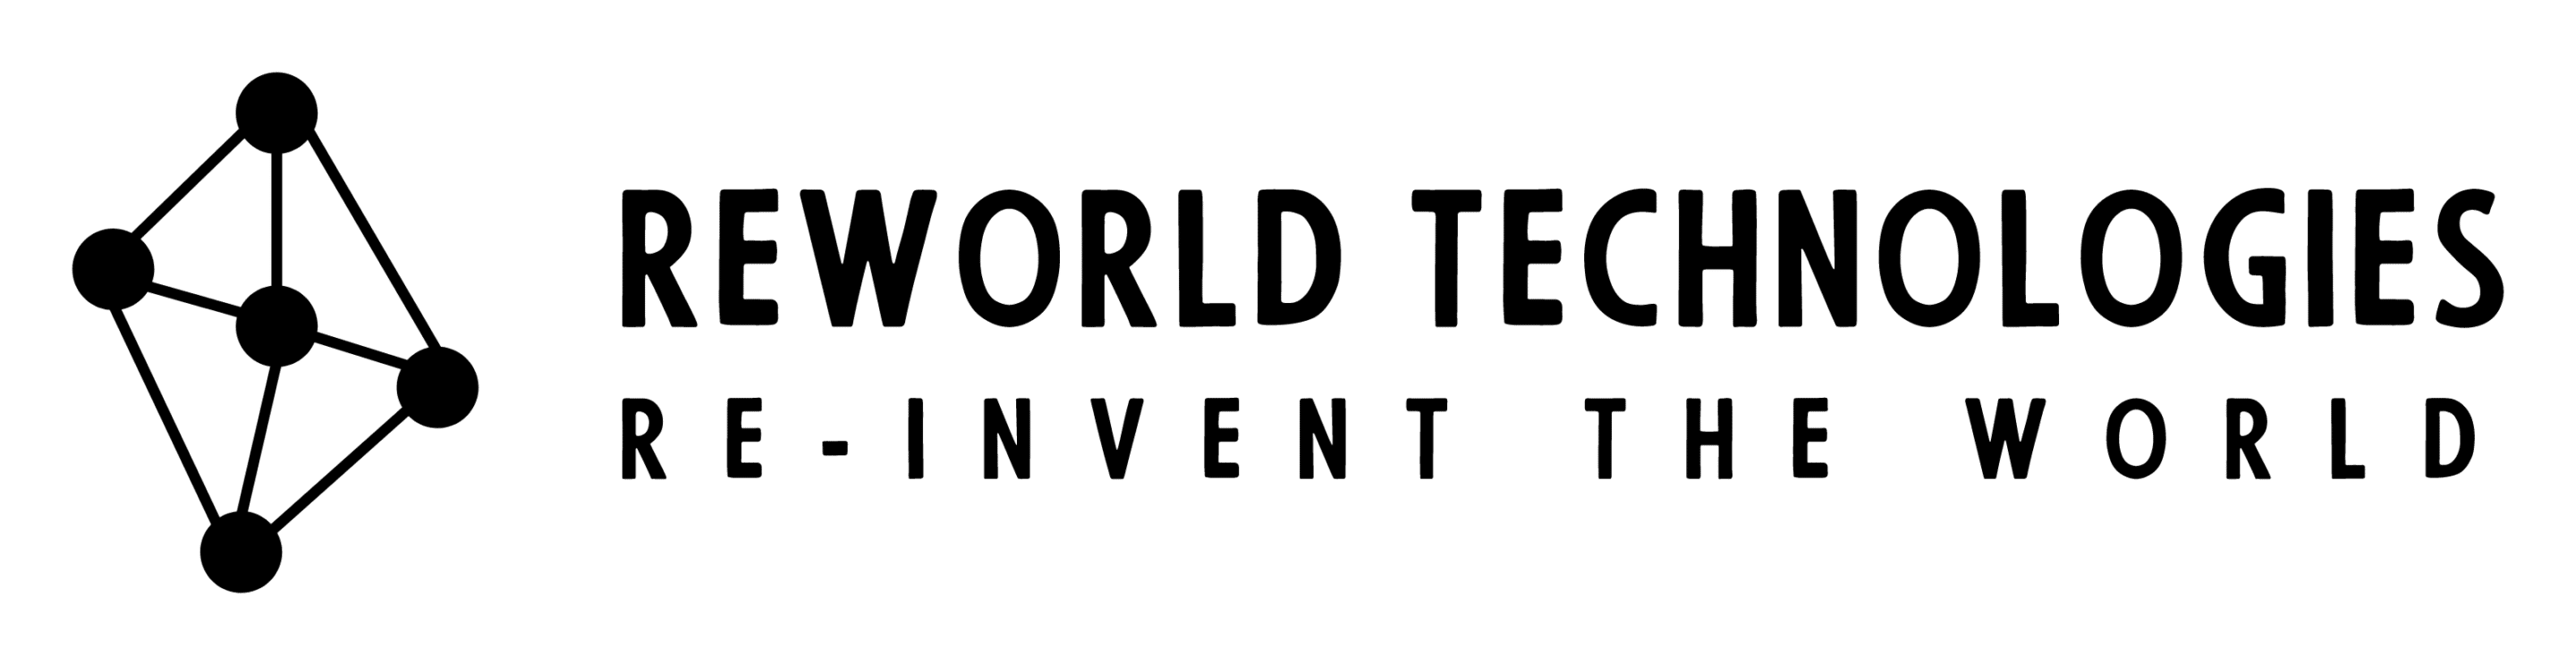 Logo Reworld Technologies Negro